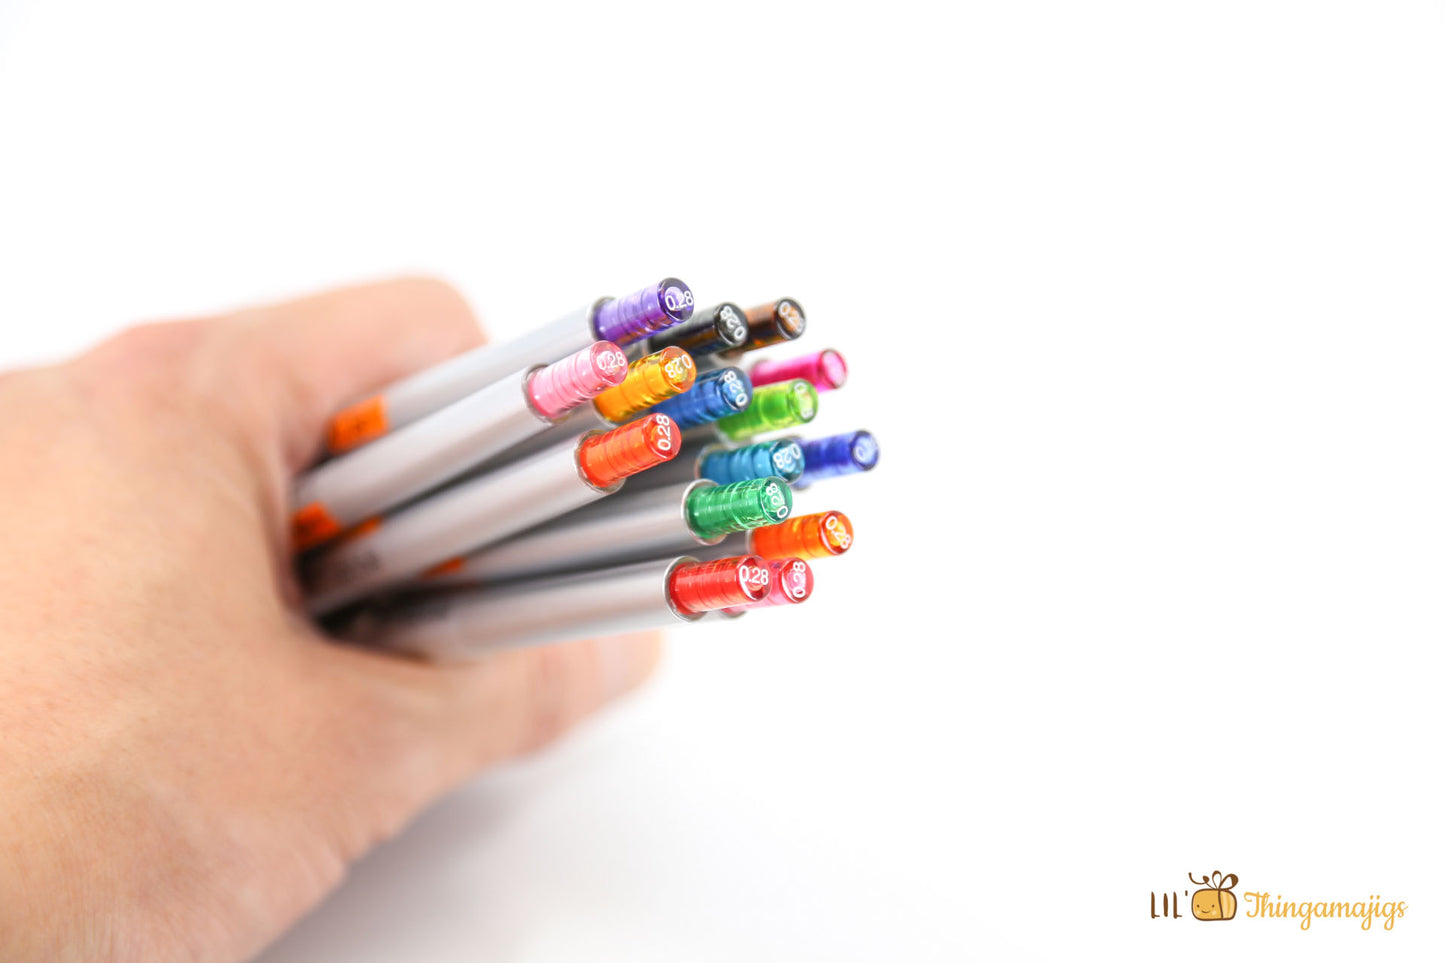 Uni Style Fit Standard Retractable Gel Pen - 0.28mm